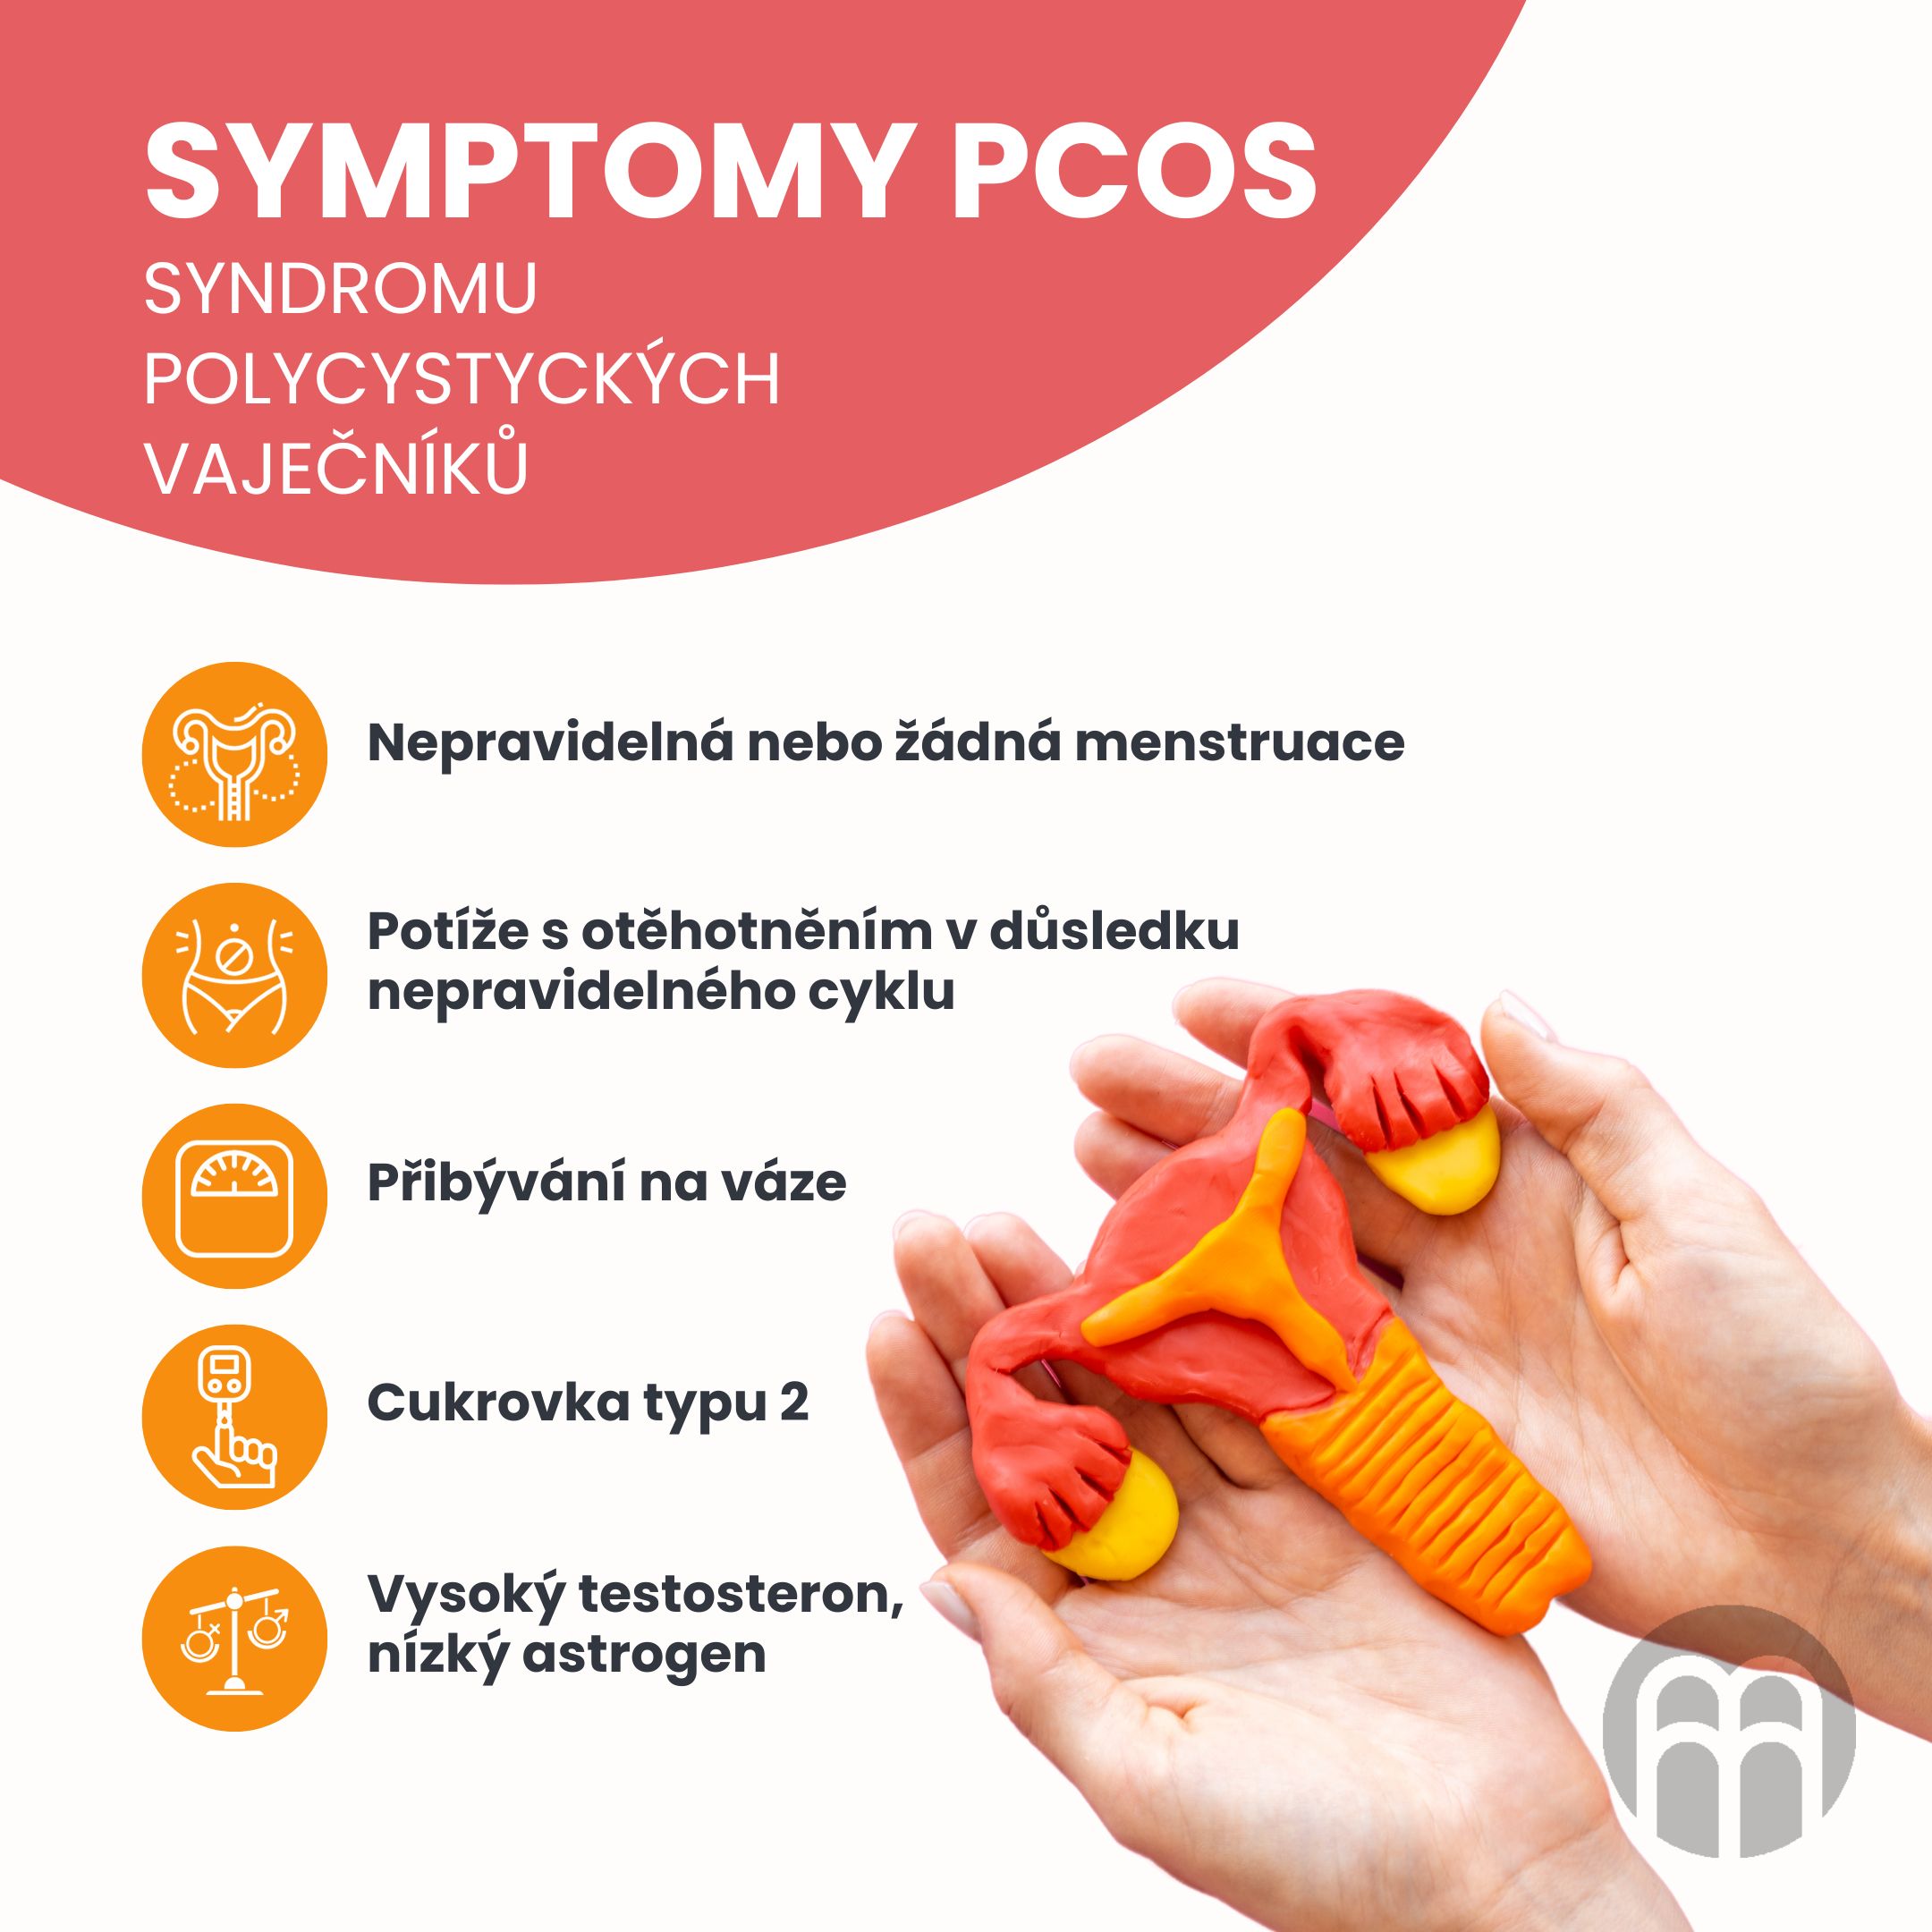 Symptomy PCOS